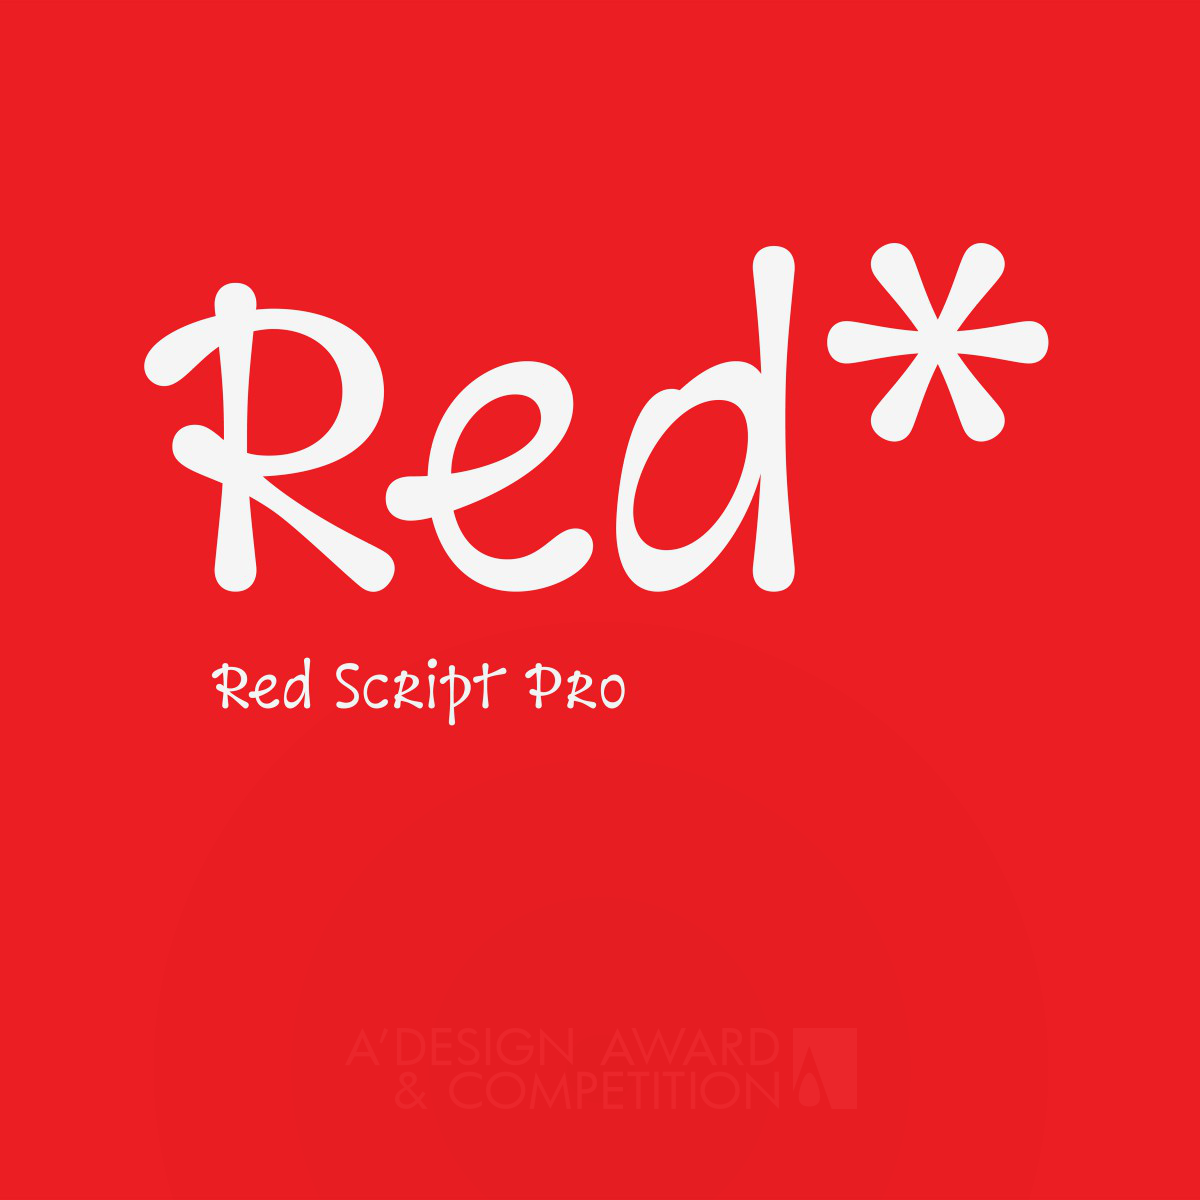 Red Script Pro typeface <b>Typeface